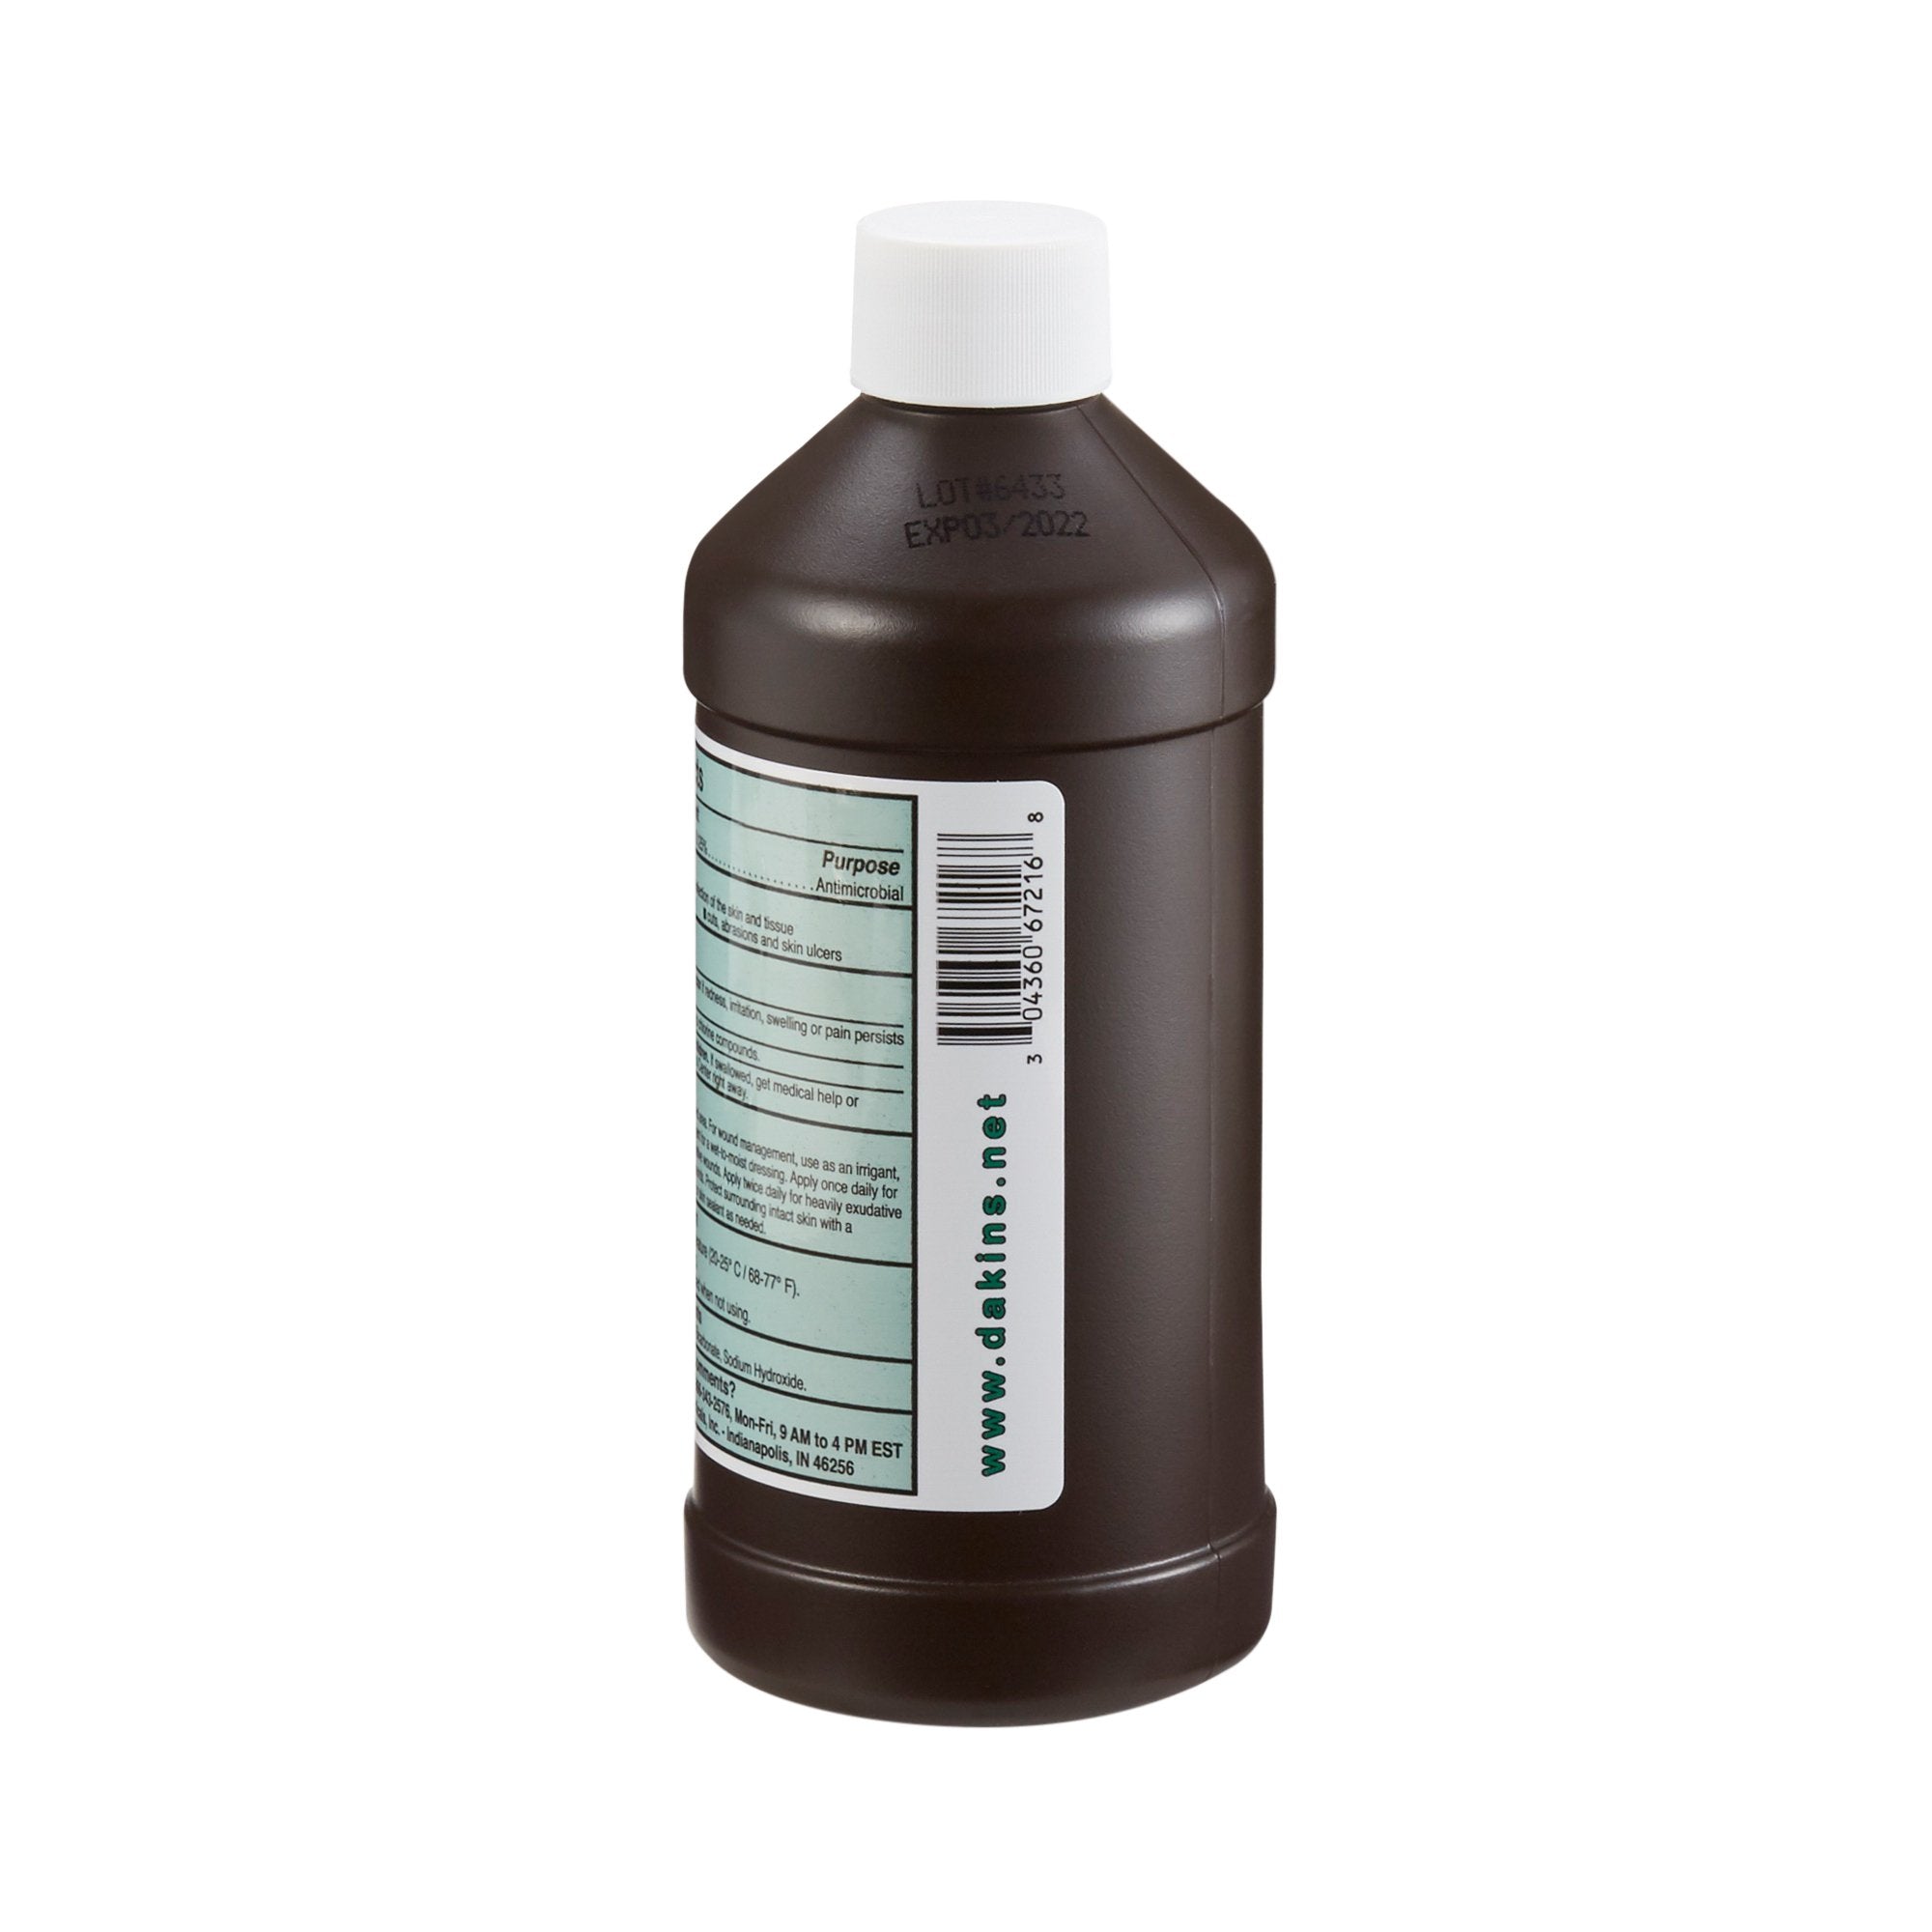 Wound Cleanser Dakin's® Solution Quarter Strength 16 oz. Twist Cap Bottle NonSterile Antimicrobial